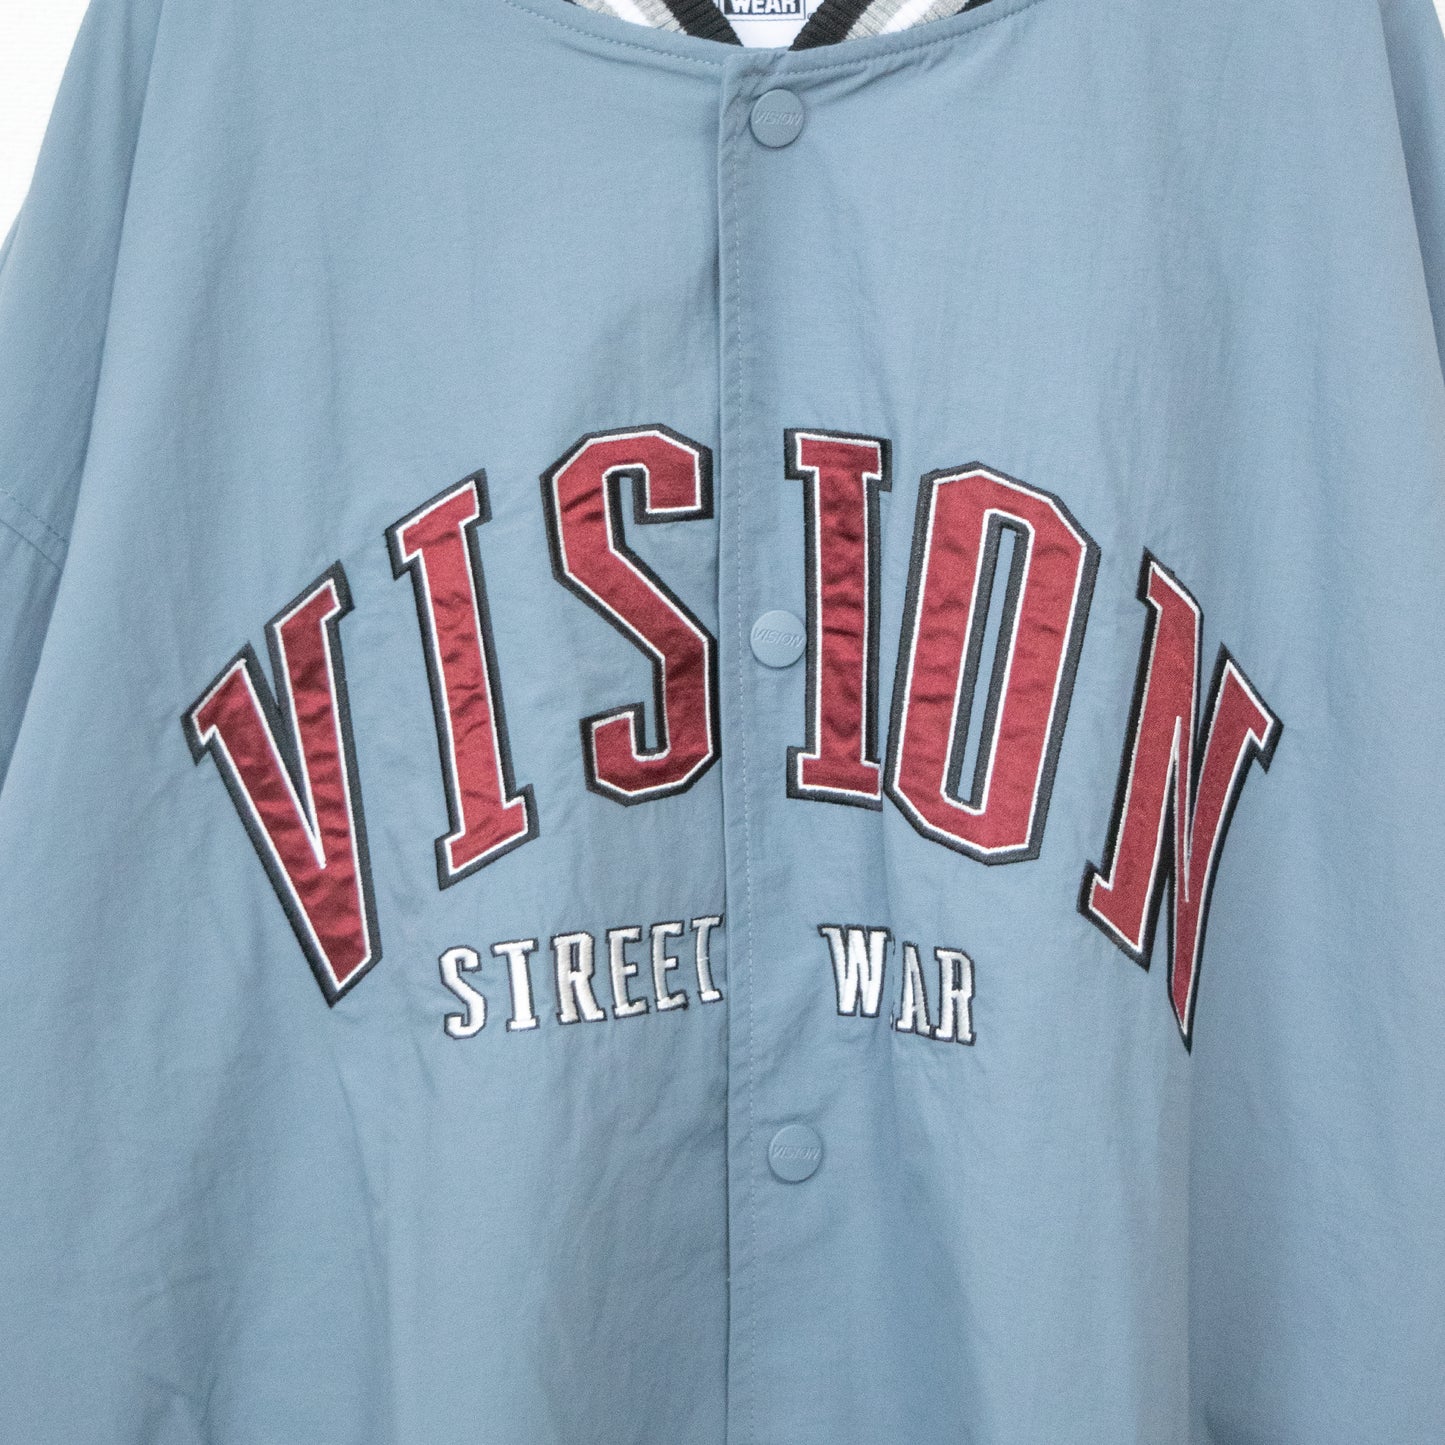 VISION STREET WEAR Nylon Patch Stadium Jacket Blue Gray